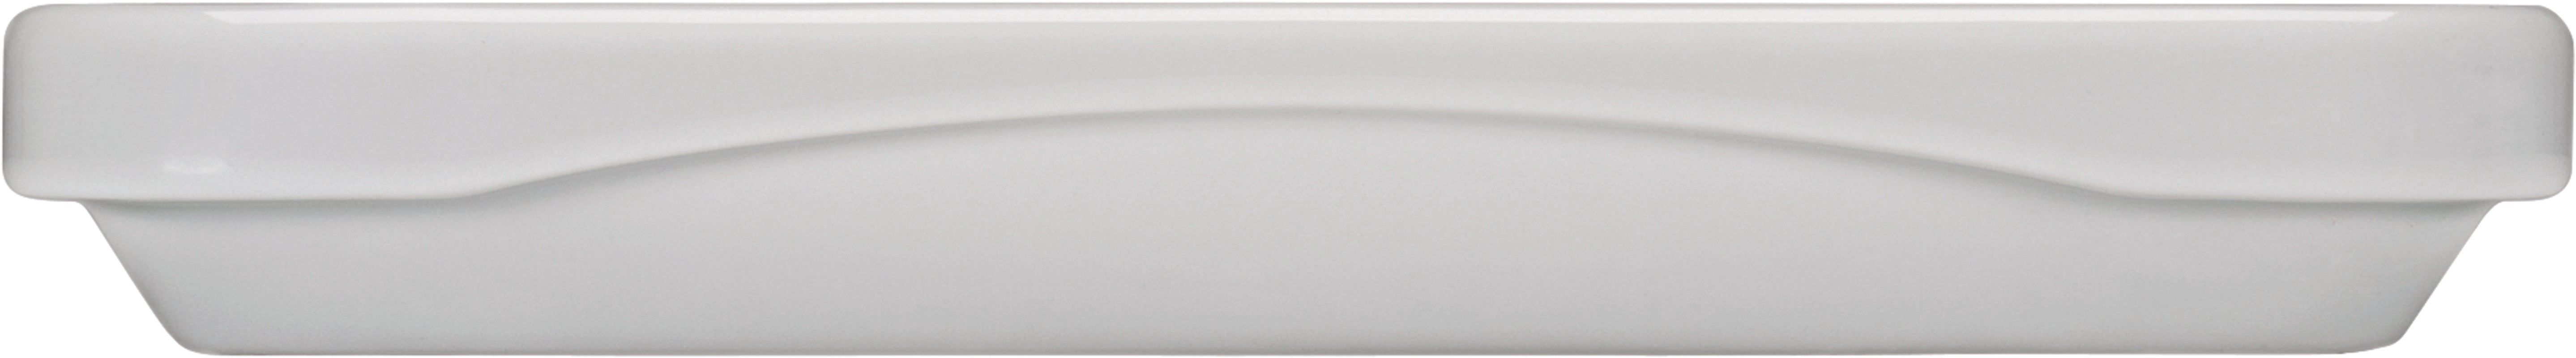 White Rectangular Platter Airflow & PN 1/1 8.7